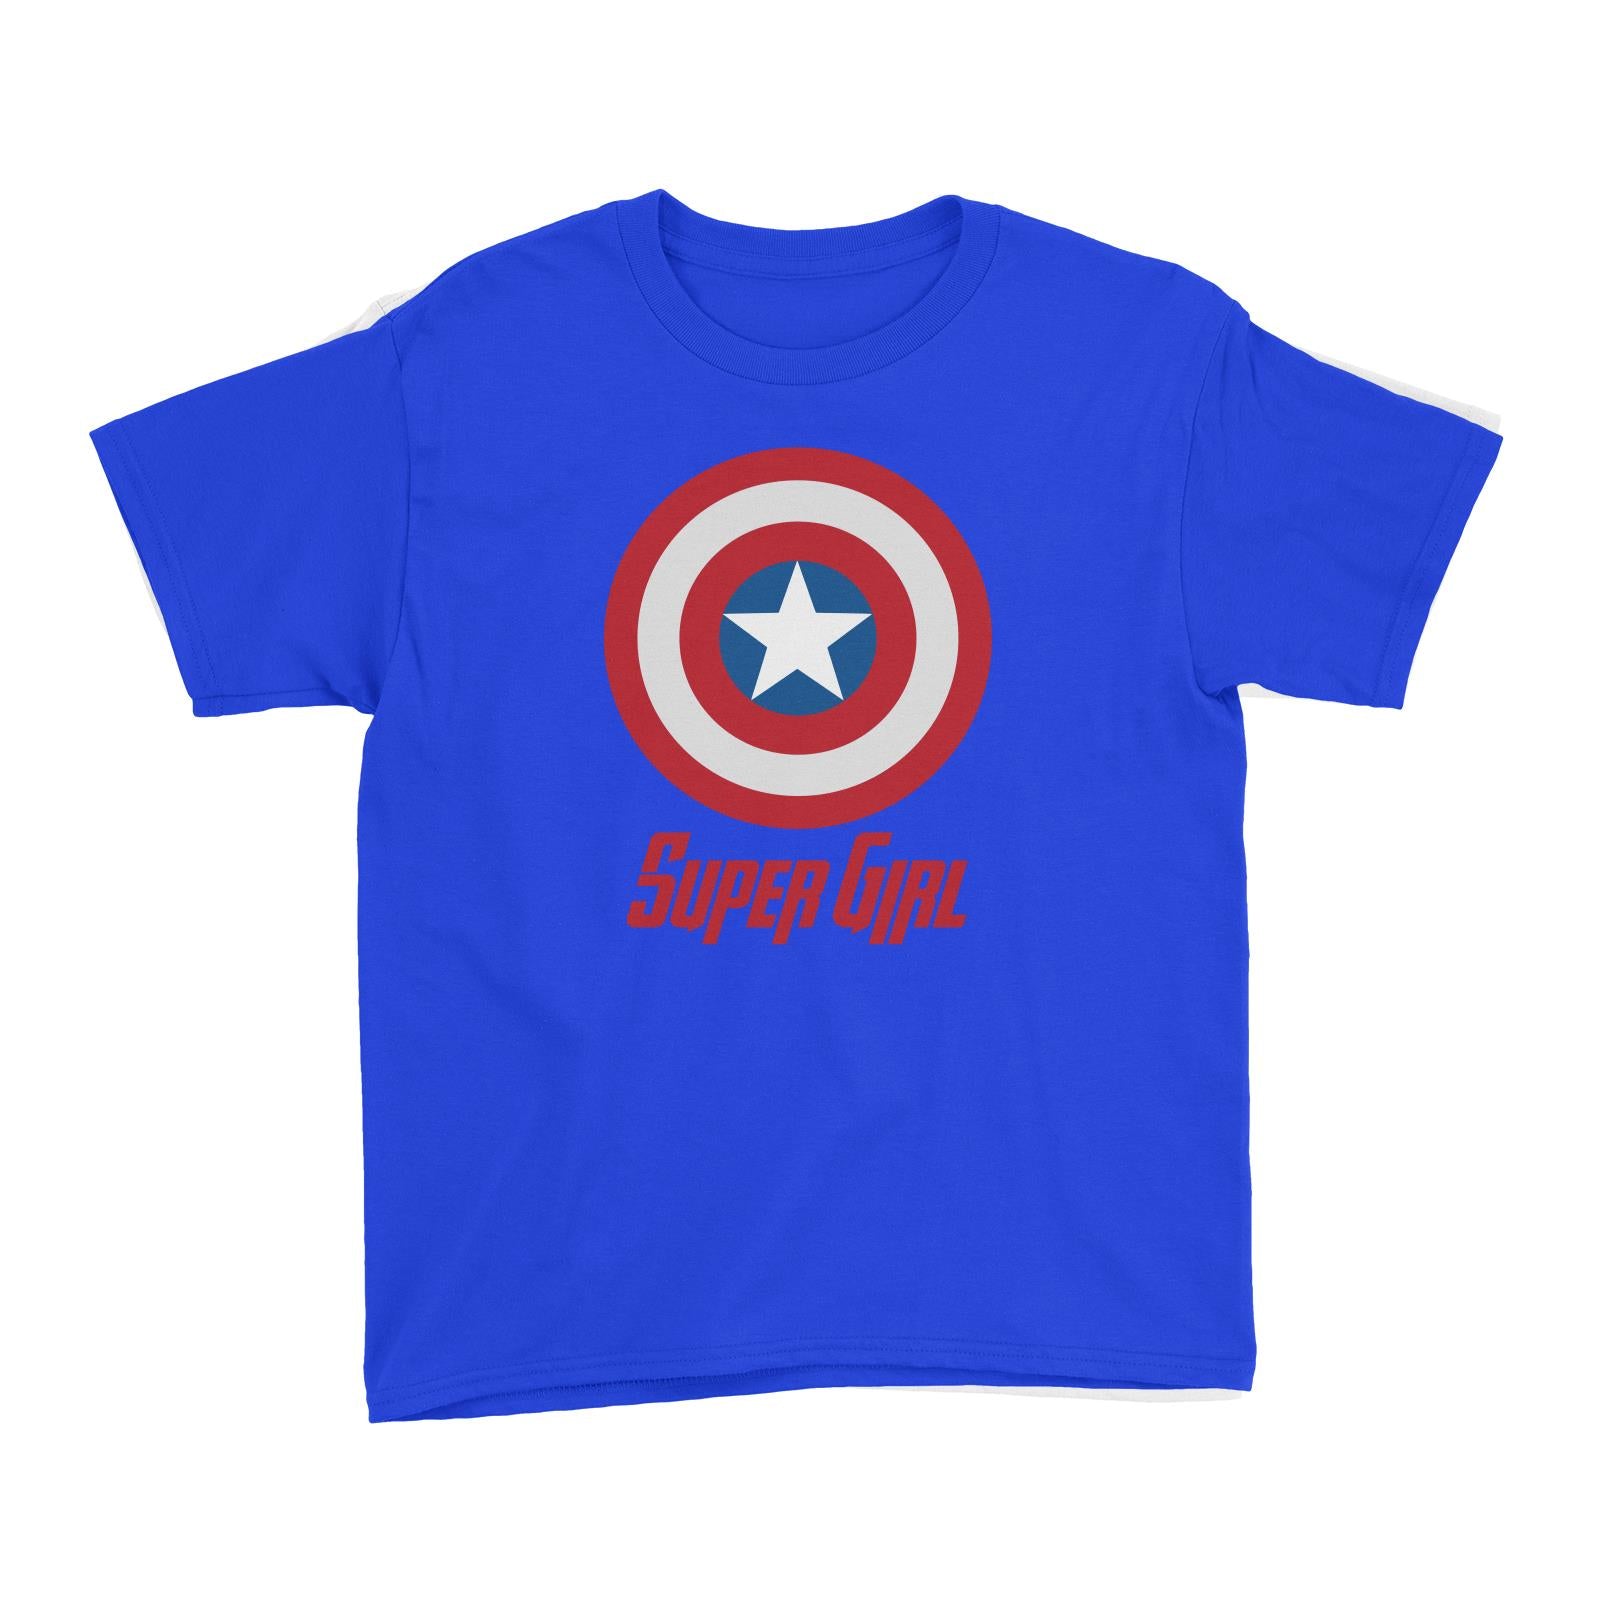 Superhero Shield Super Girl Kid's T-Shirt  Matching Family